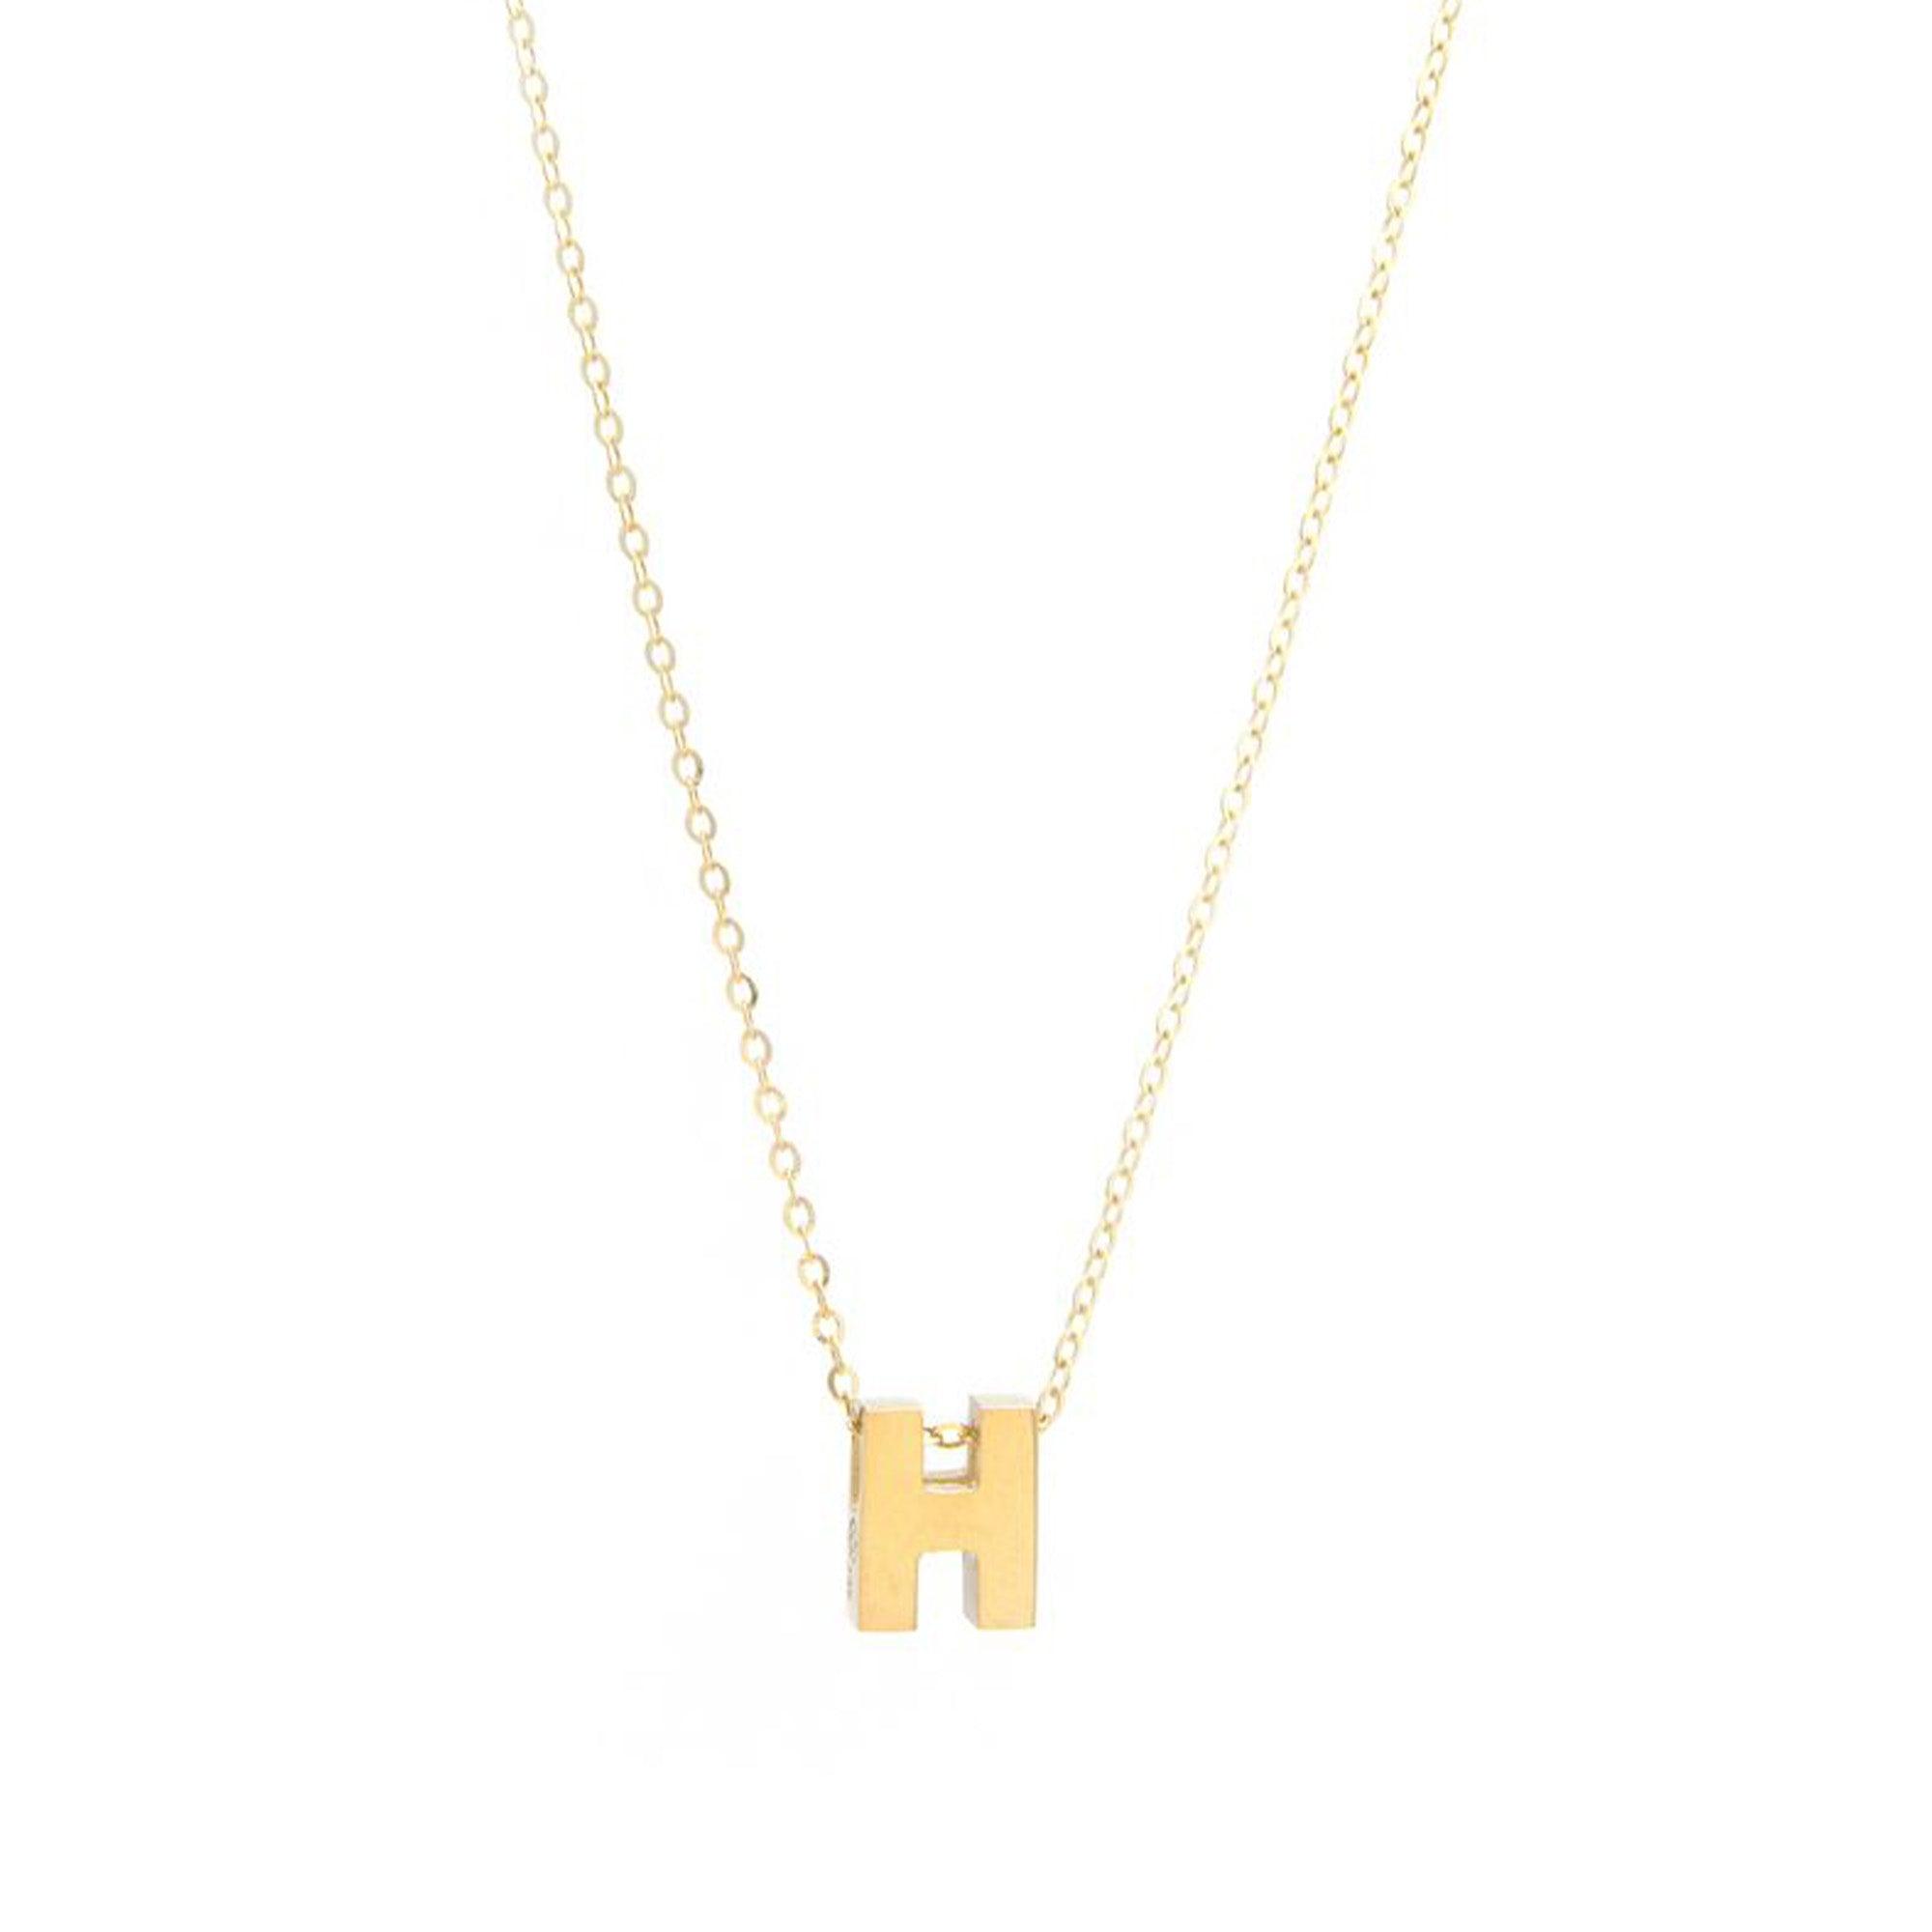 Love Letters Necklace Pendant H, gold